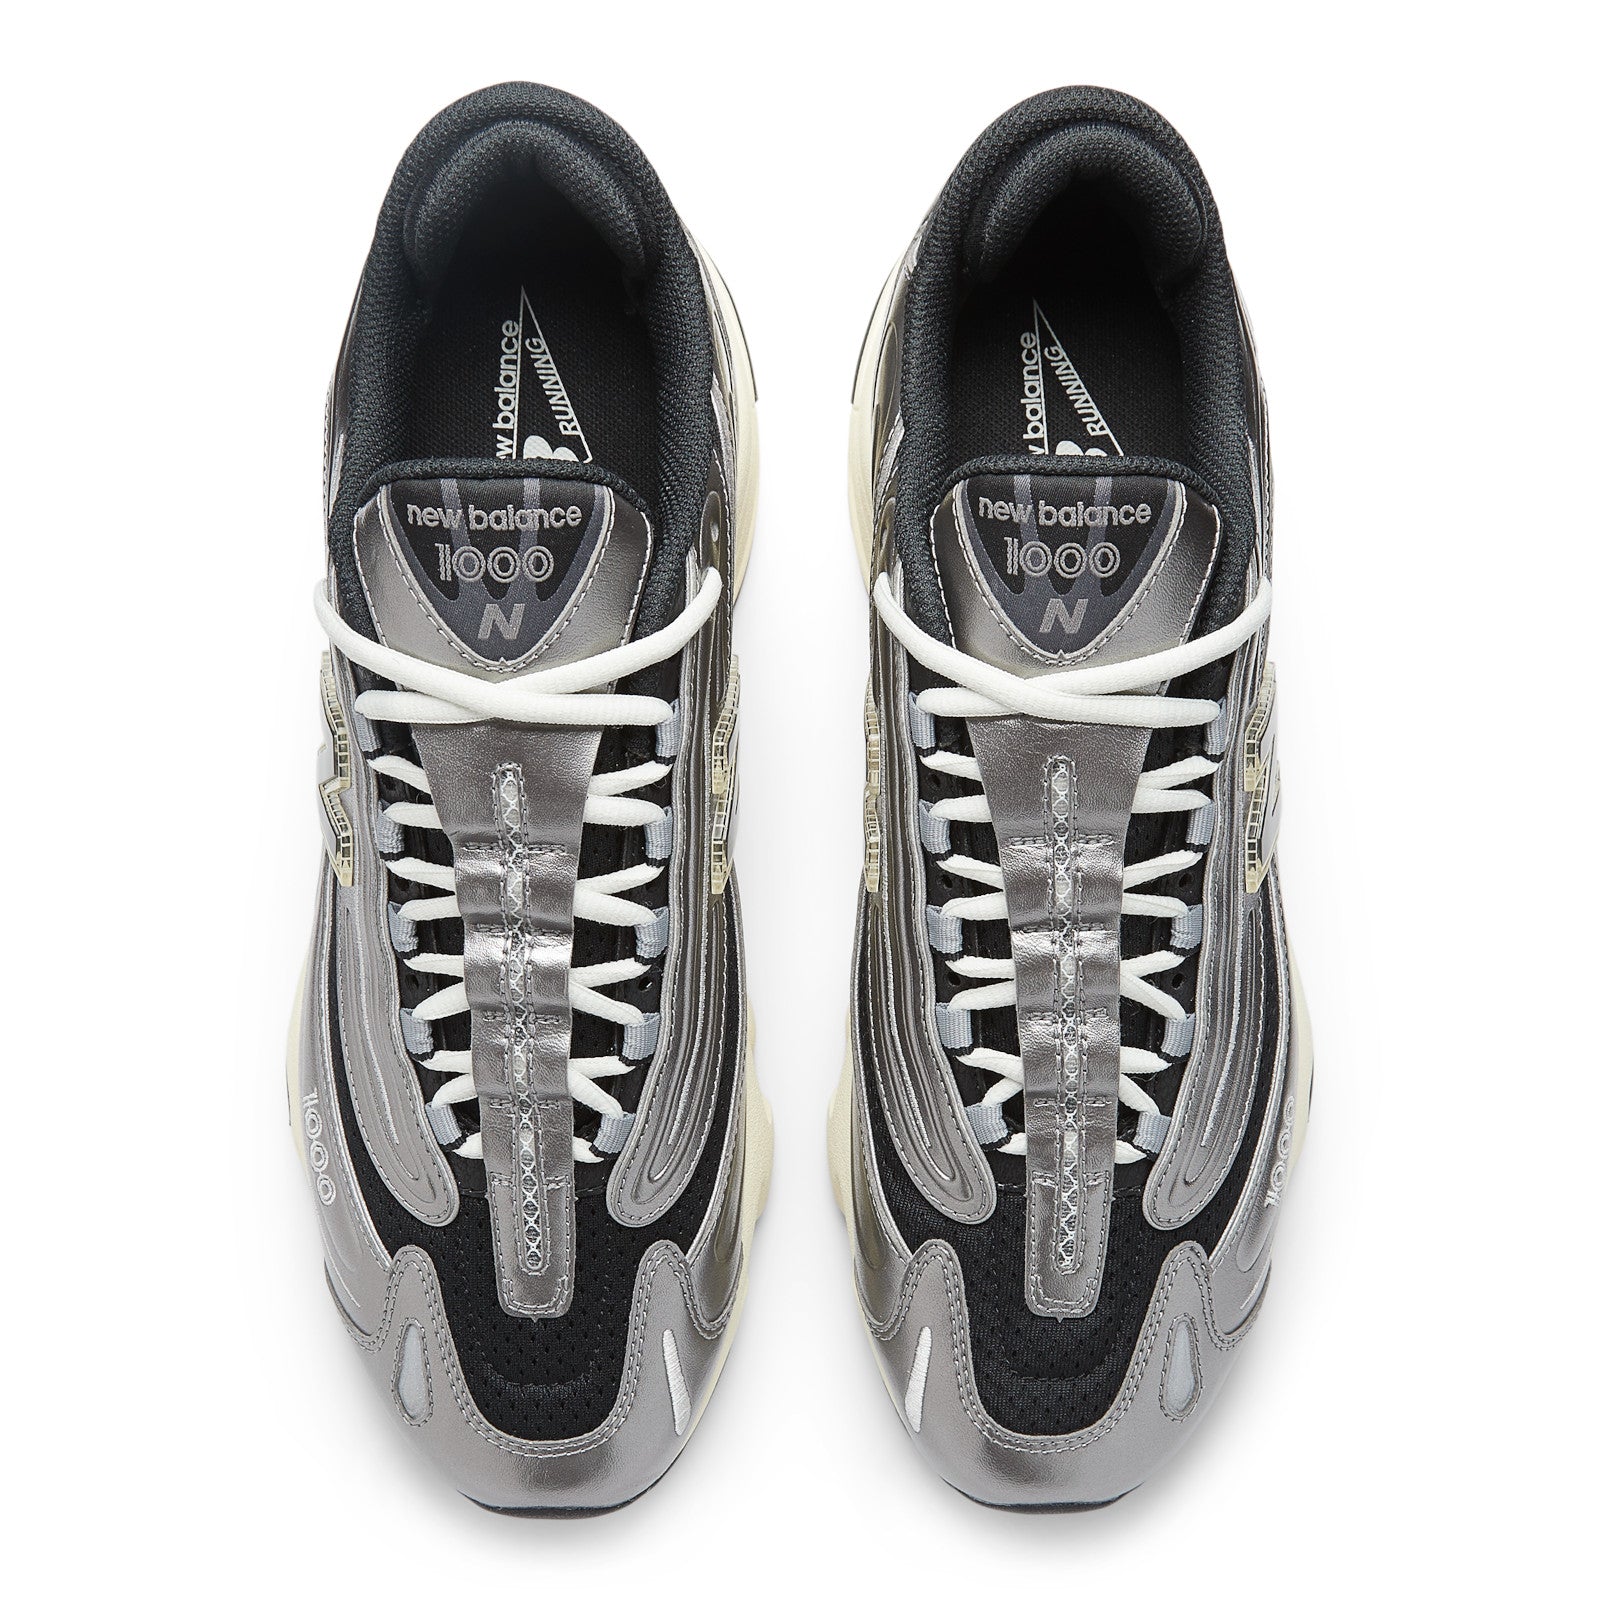 New Balance - 1000 Shoes - Silver Metallic with Black & Dawn Glow M1000SL